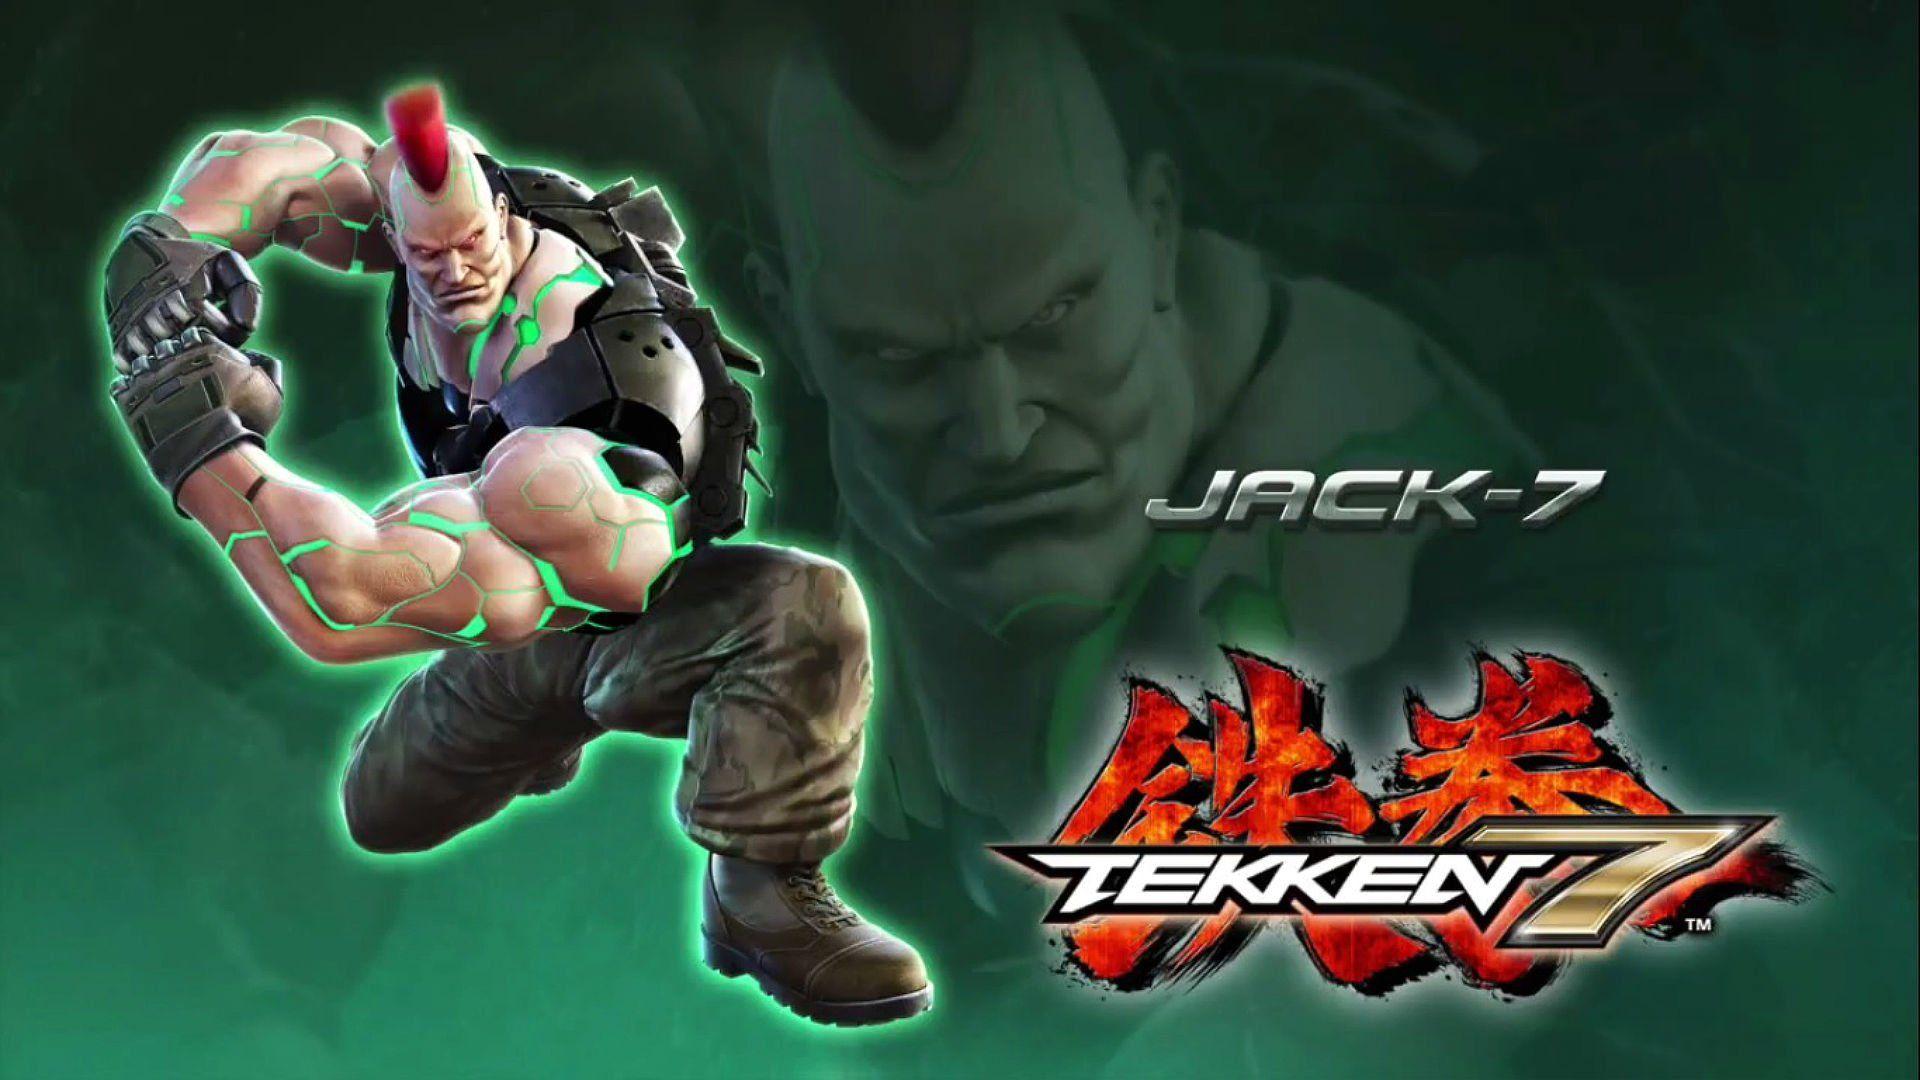 Download Tekken 7 HD Wallpaper for free. Read games reviews, play